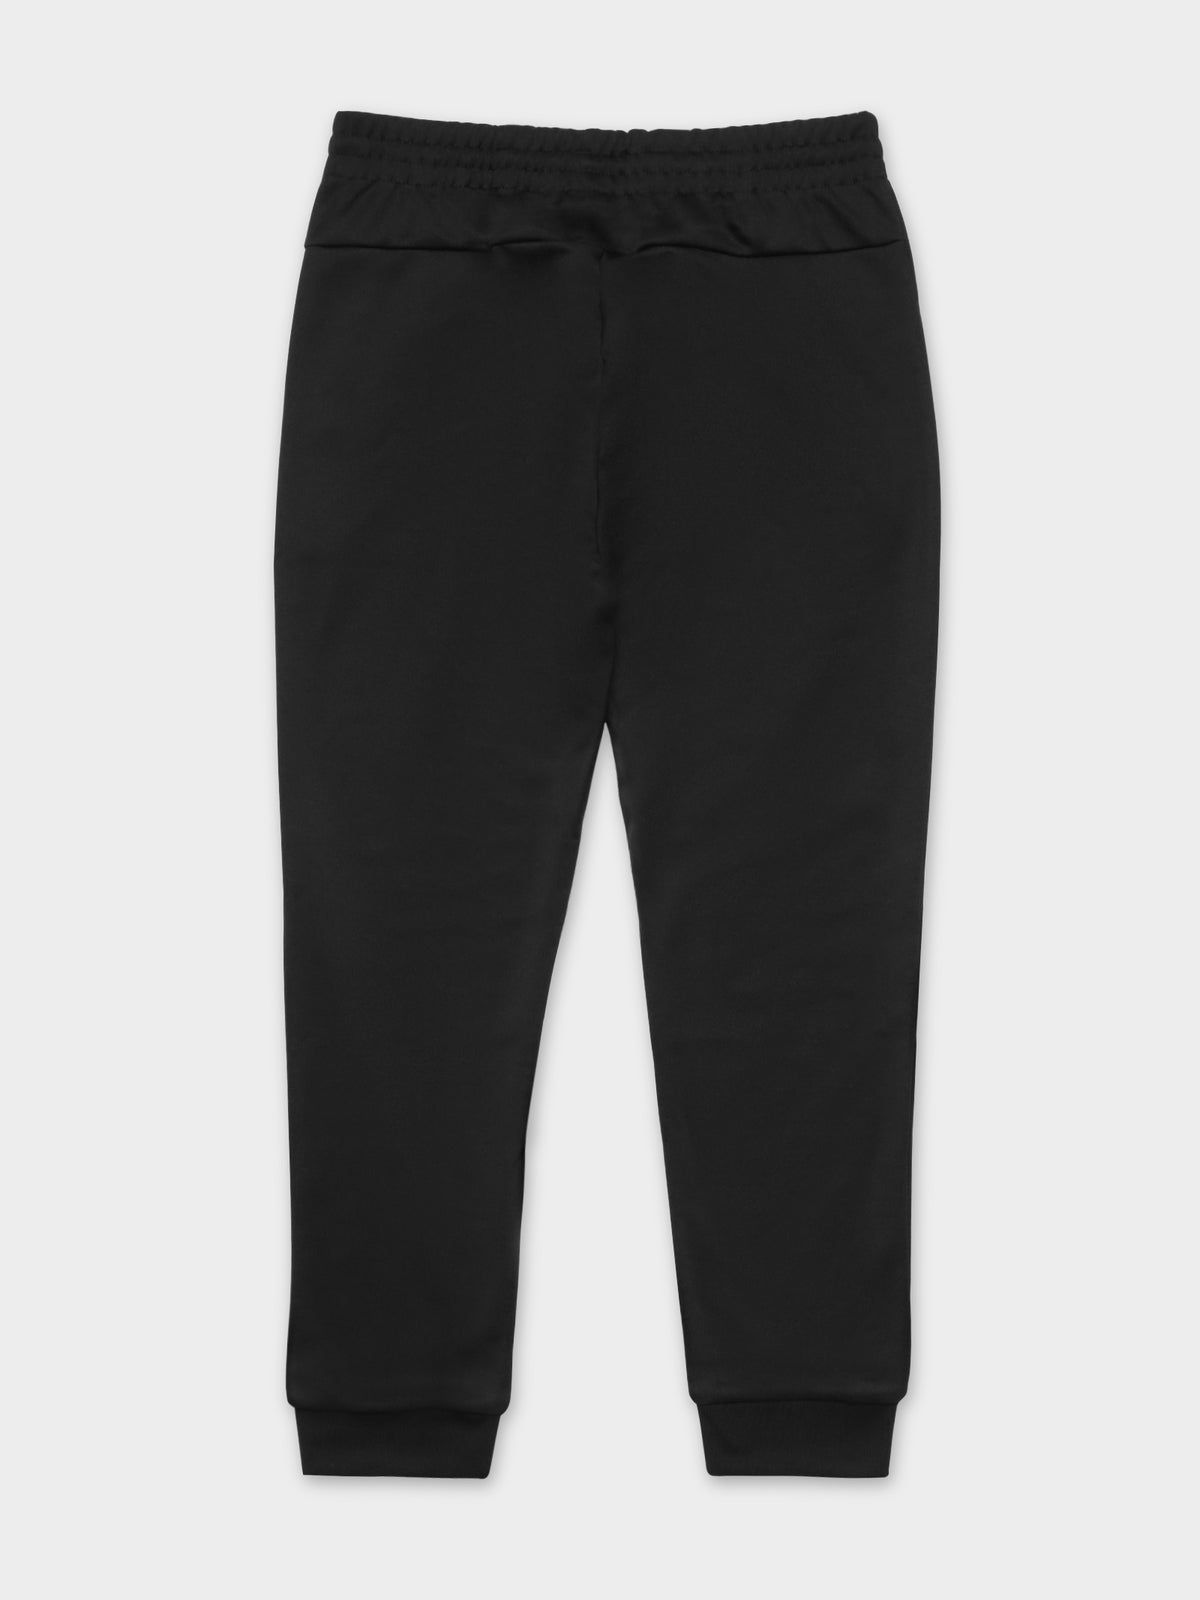 Trefoil Essentials Track Pants in Black